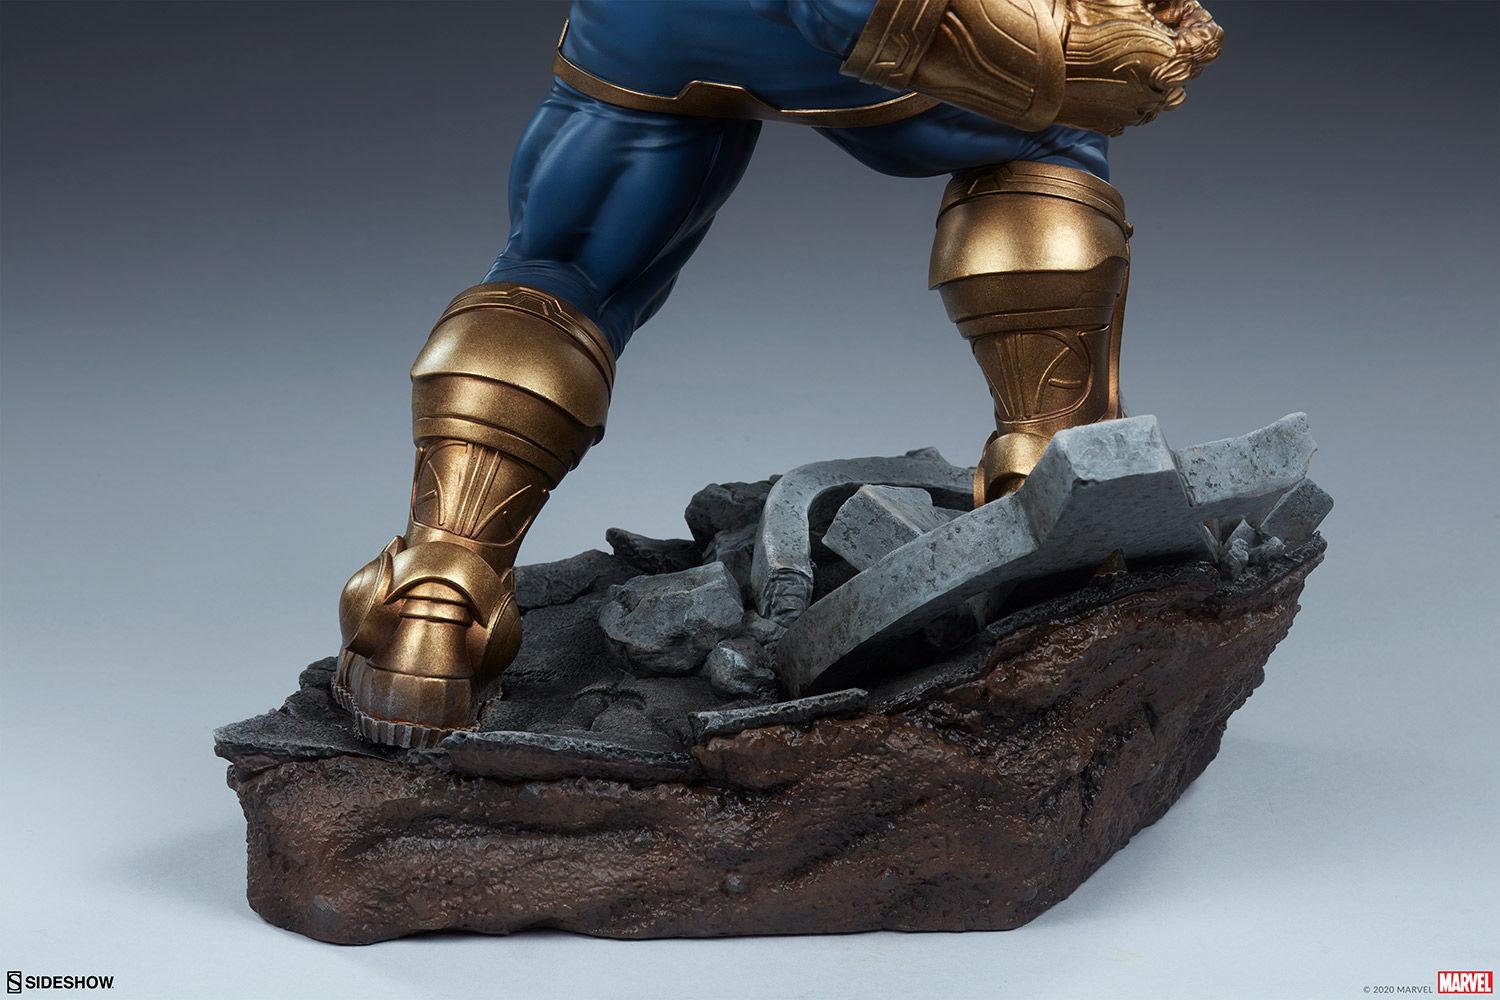 SID2005702 Marvel Comics - Thanos Modern Statue - Sideshow Collectibles - Titan Pop Culture